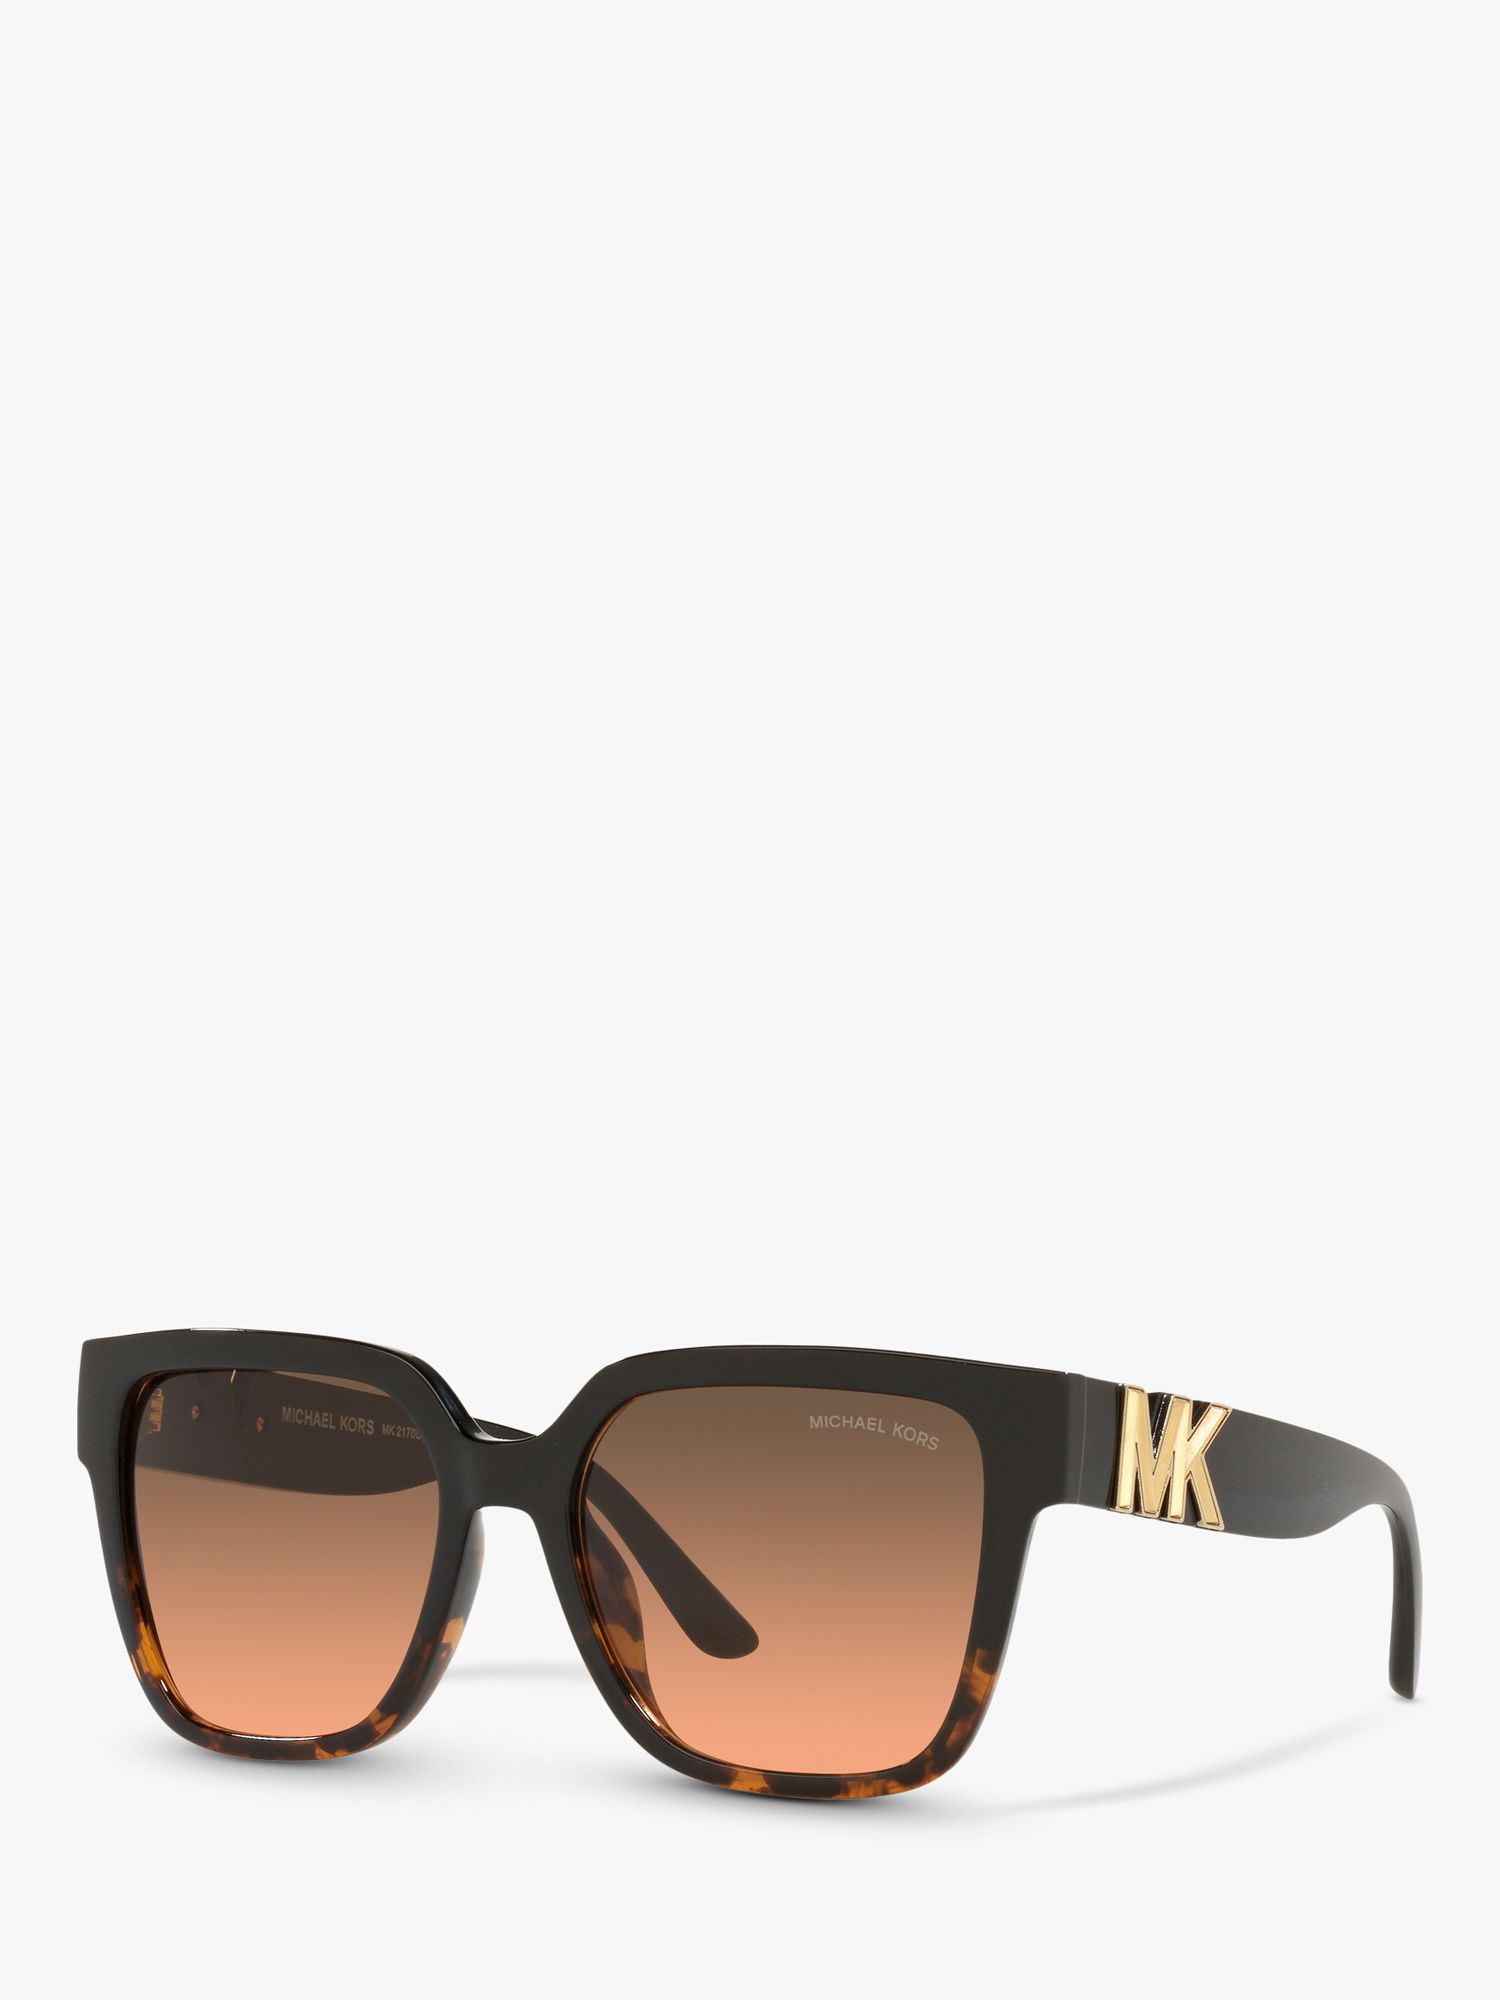 Michael Kors MK2170U Women's Karlie Square Sunglasses, Black/Dark Tortoise  at John Lewis & Partners